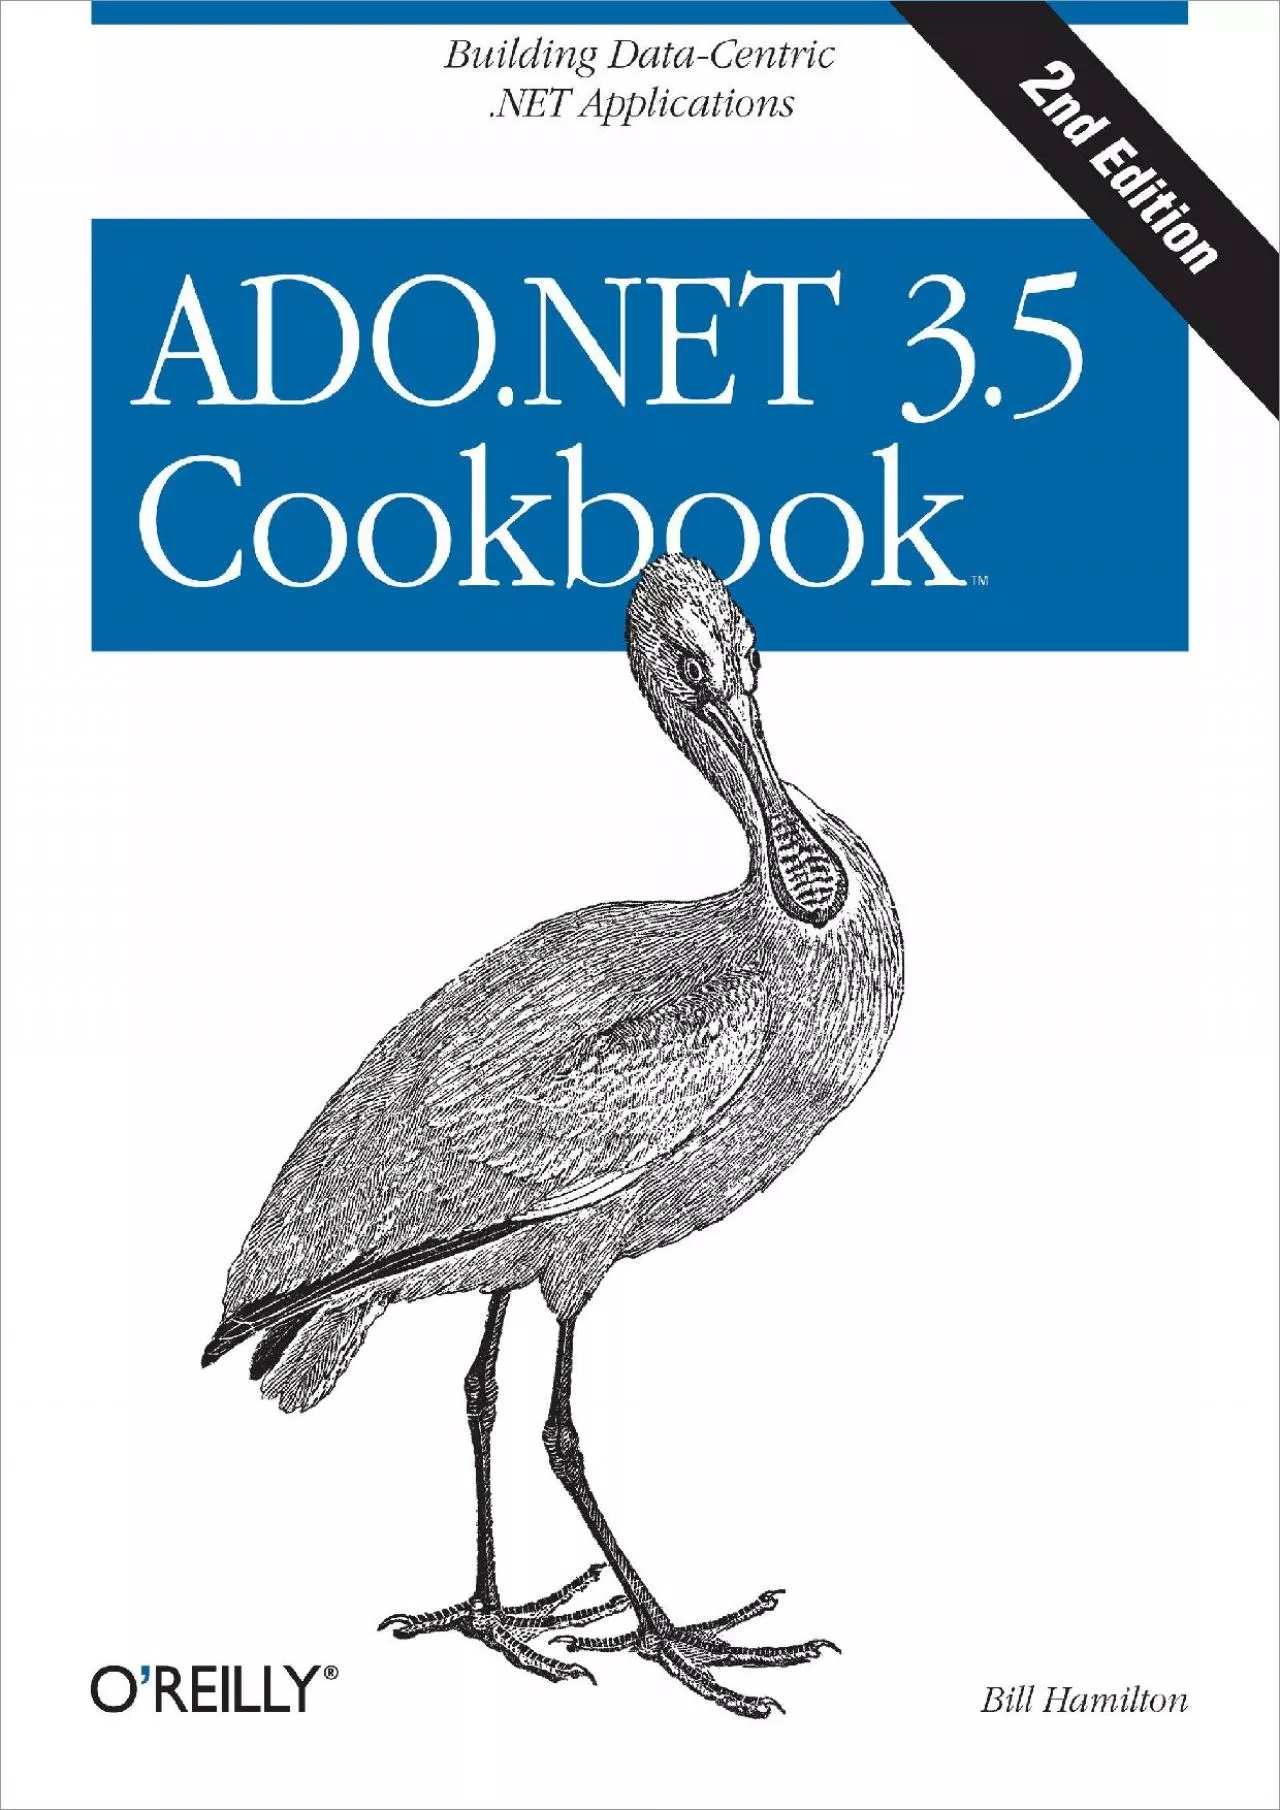 [READING BOOK]-ADO.NET 3.5 Cookbook: Building Data-Centric .NET Applications (Cookbooks